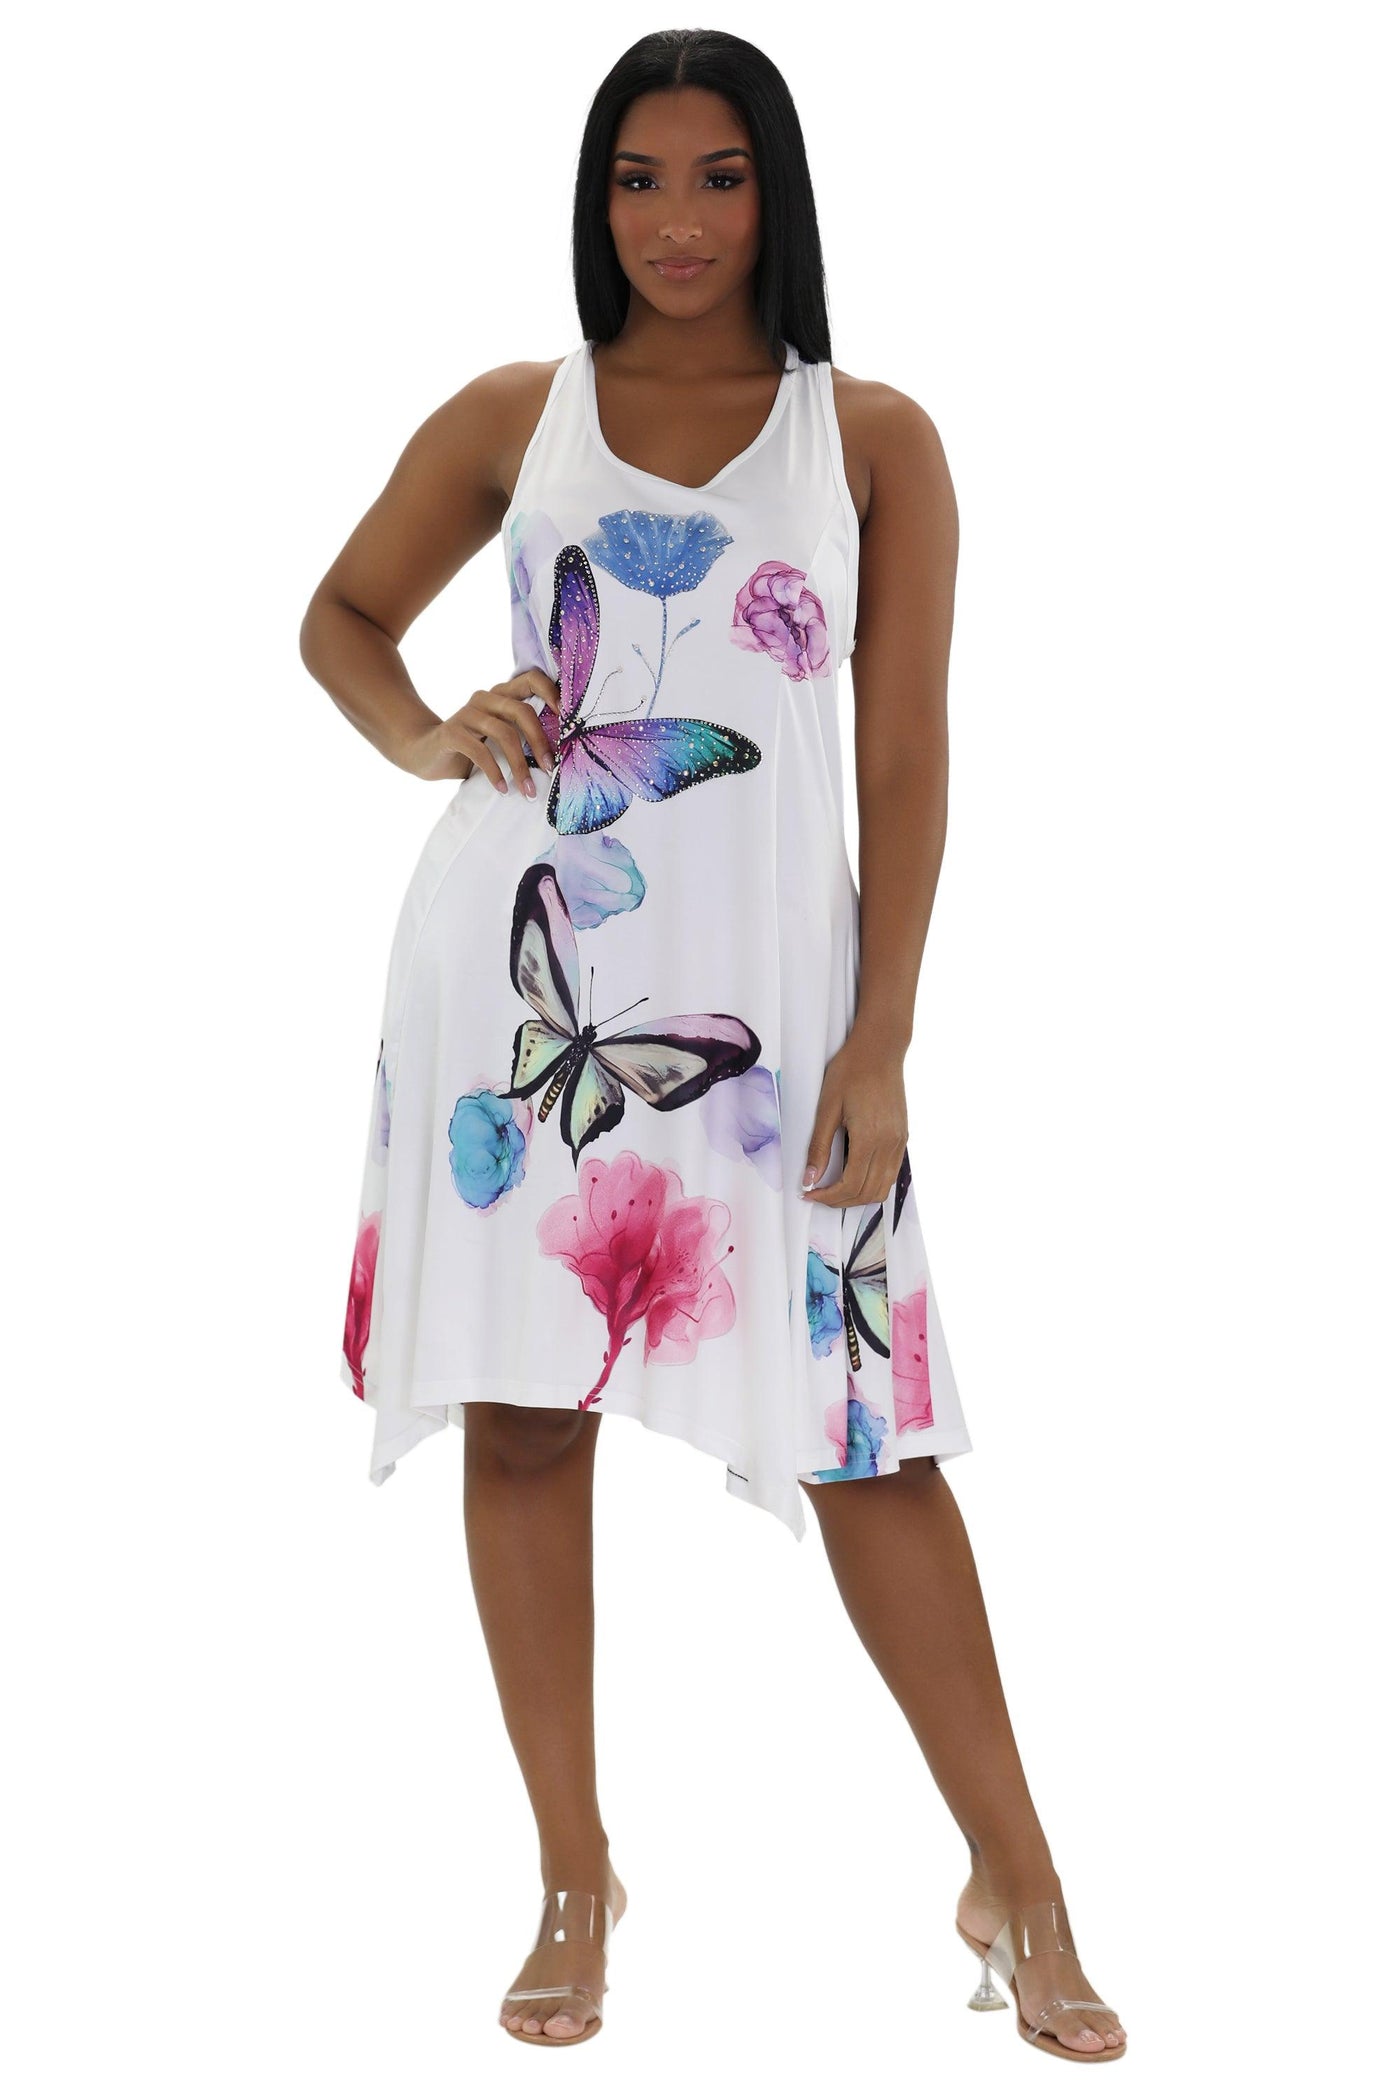 Butterfly Print Dress 21237  - Advance Apparels Inc